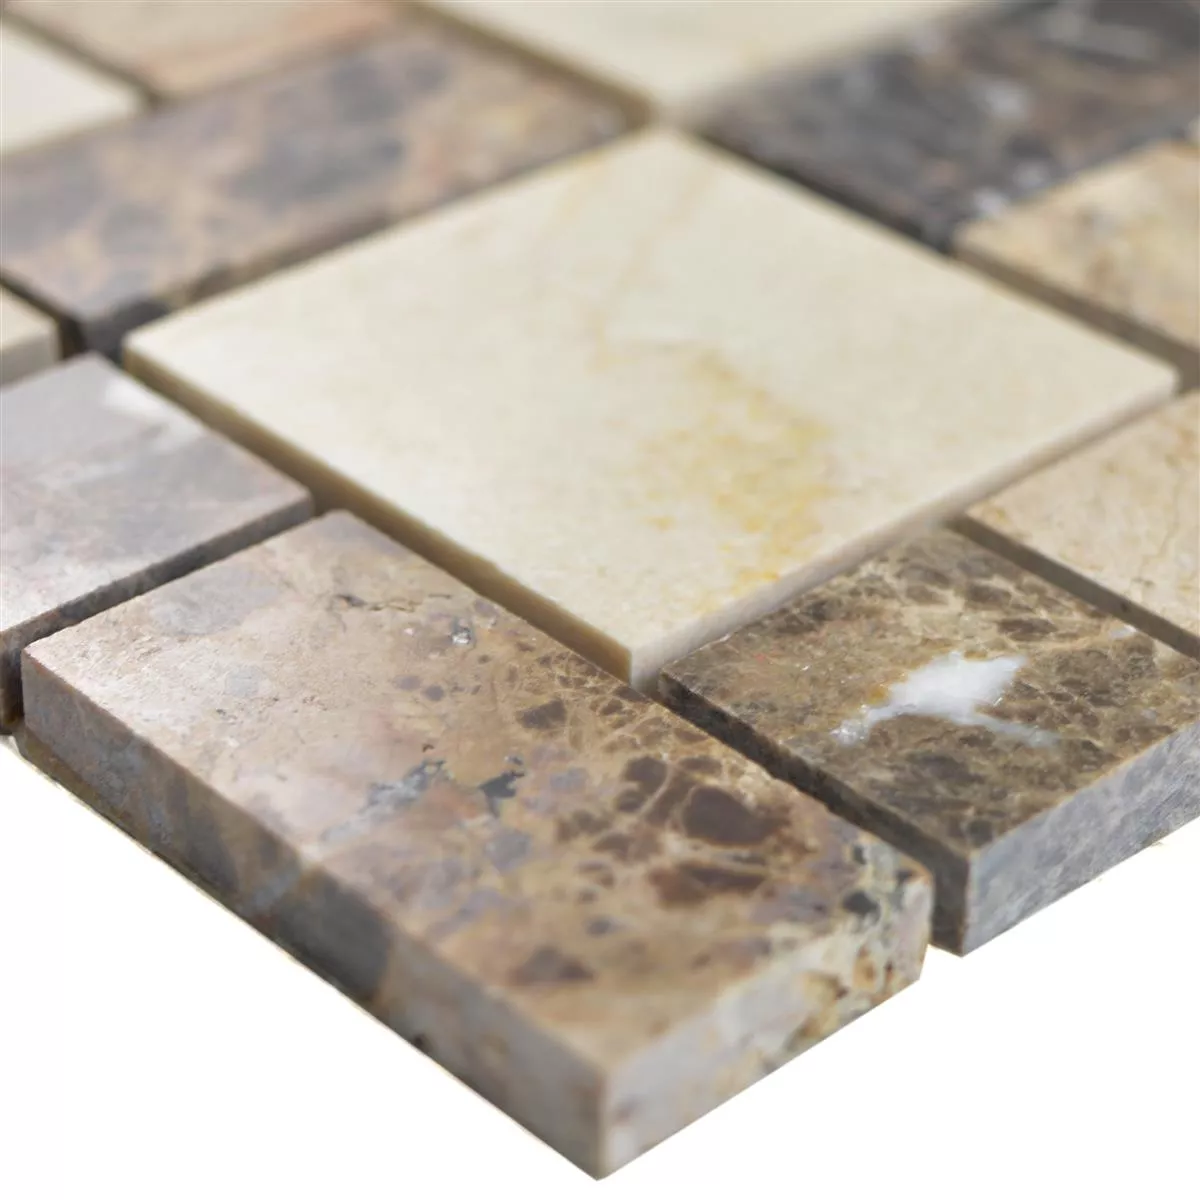 Marble Natural Stone Mosaic Tiles Cordoba Brown Beige